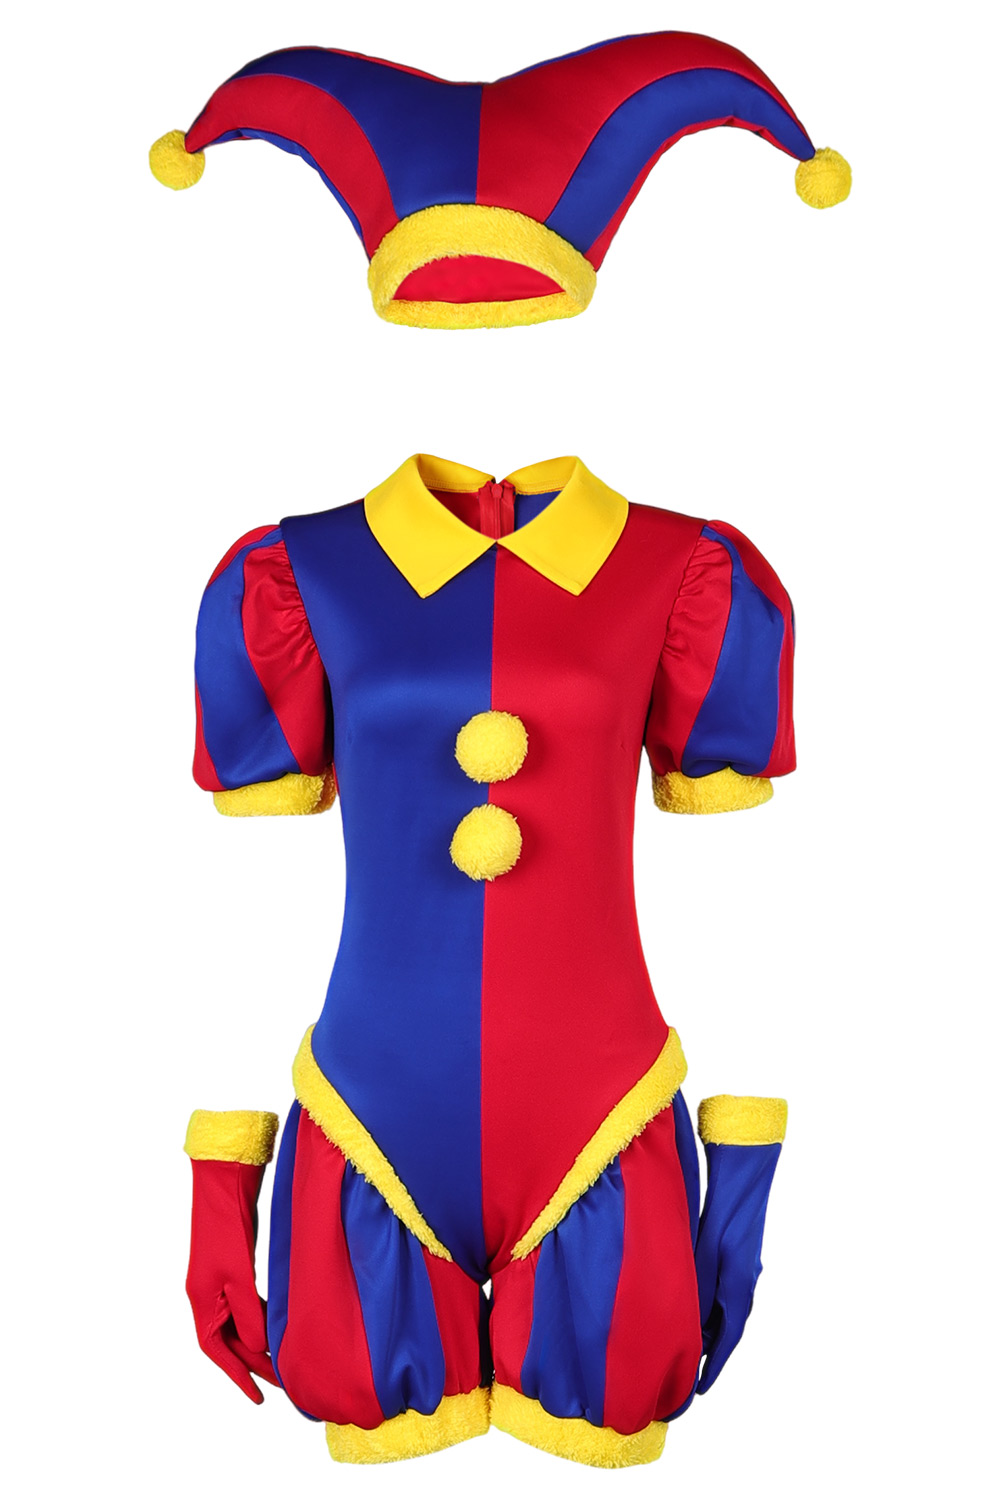 https://img-va.myshopline.com/image/store/1629176677414/Anime-The-Amazing-Digital-Circus-Pomni-Jumpsuit-Outfits-Halloween-Carnival-Suit-Cosplay-Costume-(2).jpeg?w=1001&h=1500